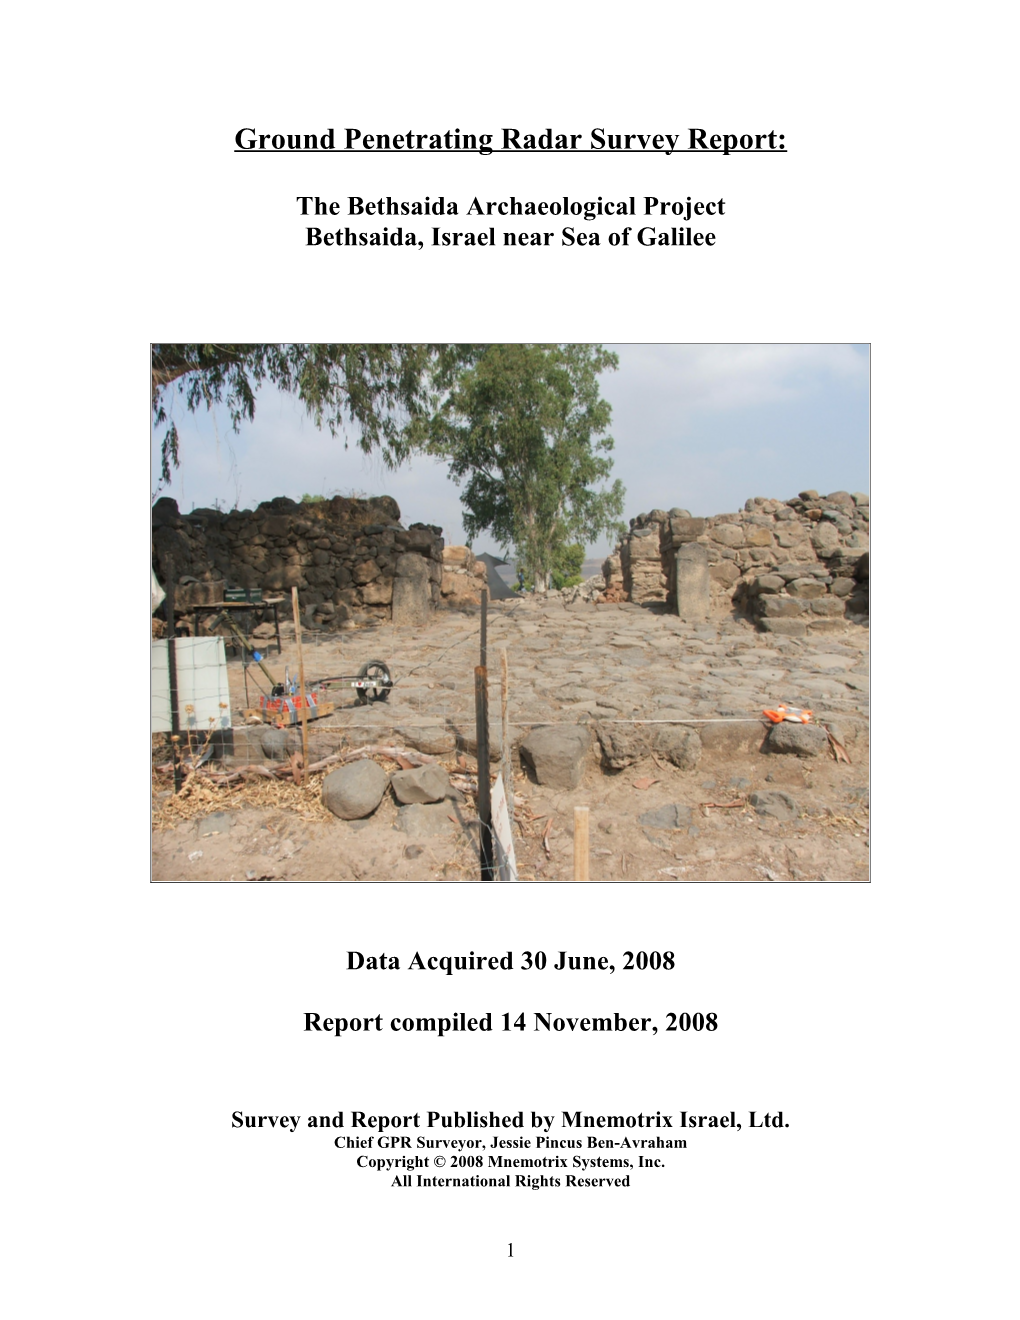 Bethsaida Archaeological Report